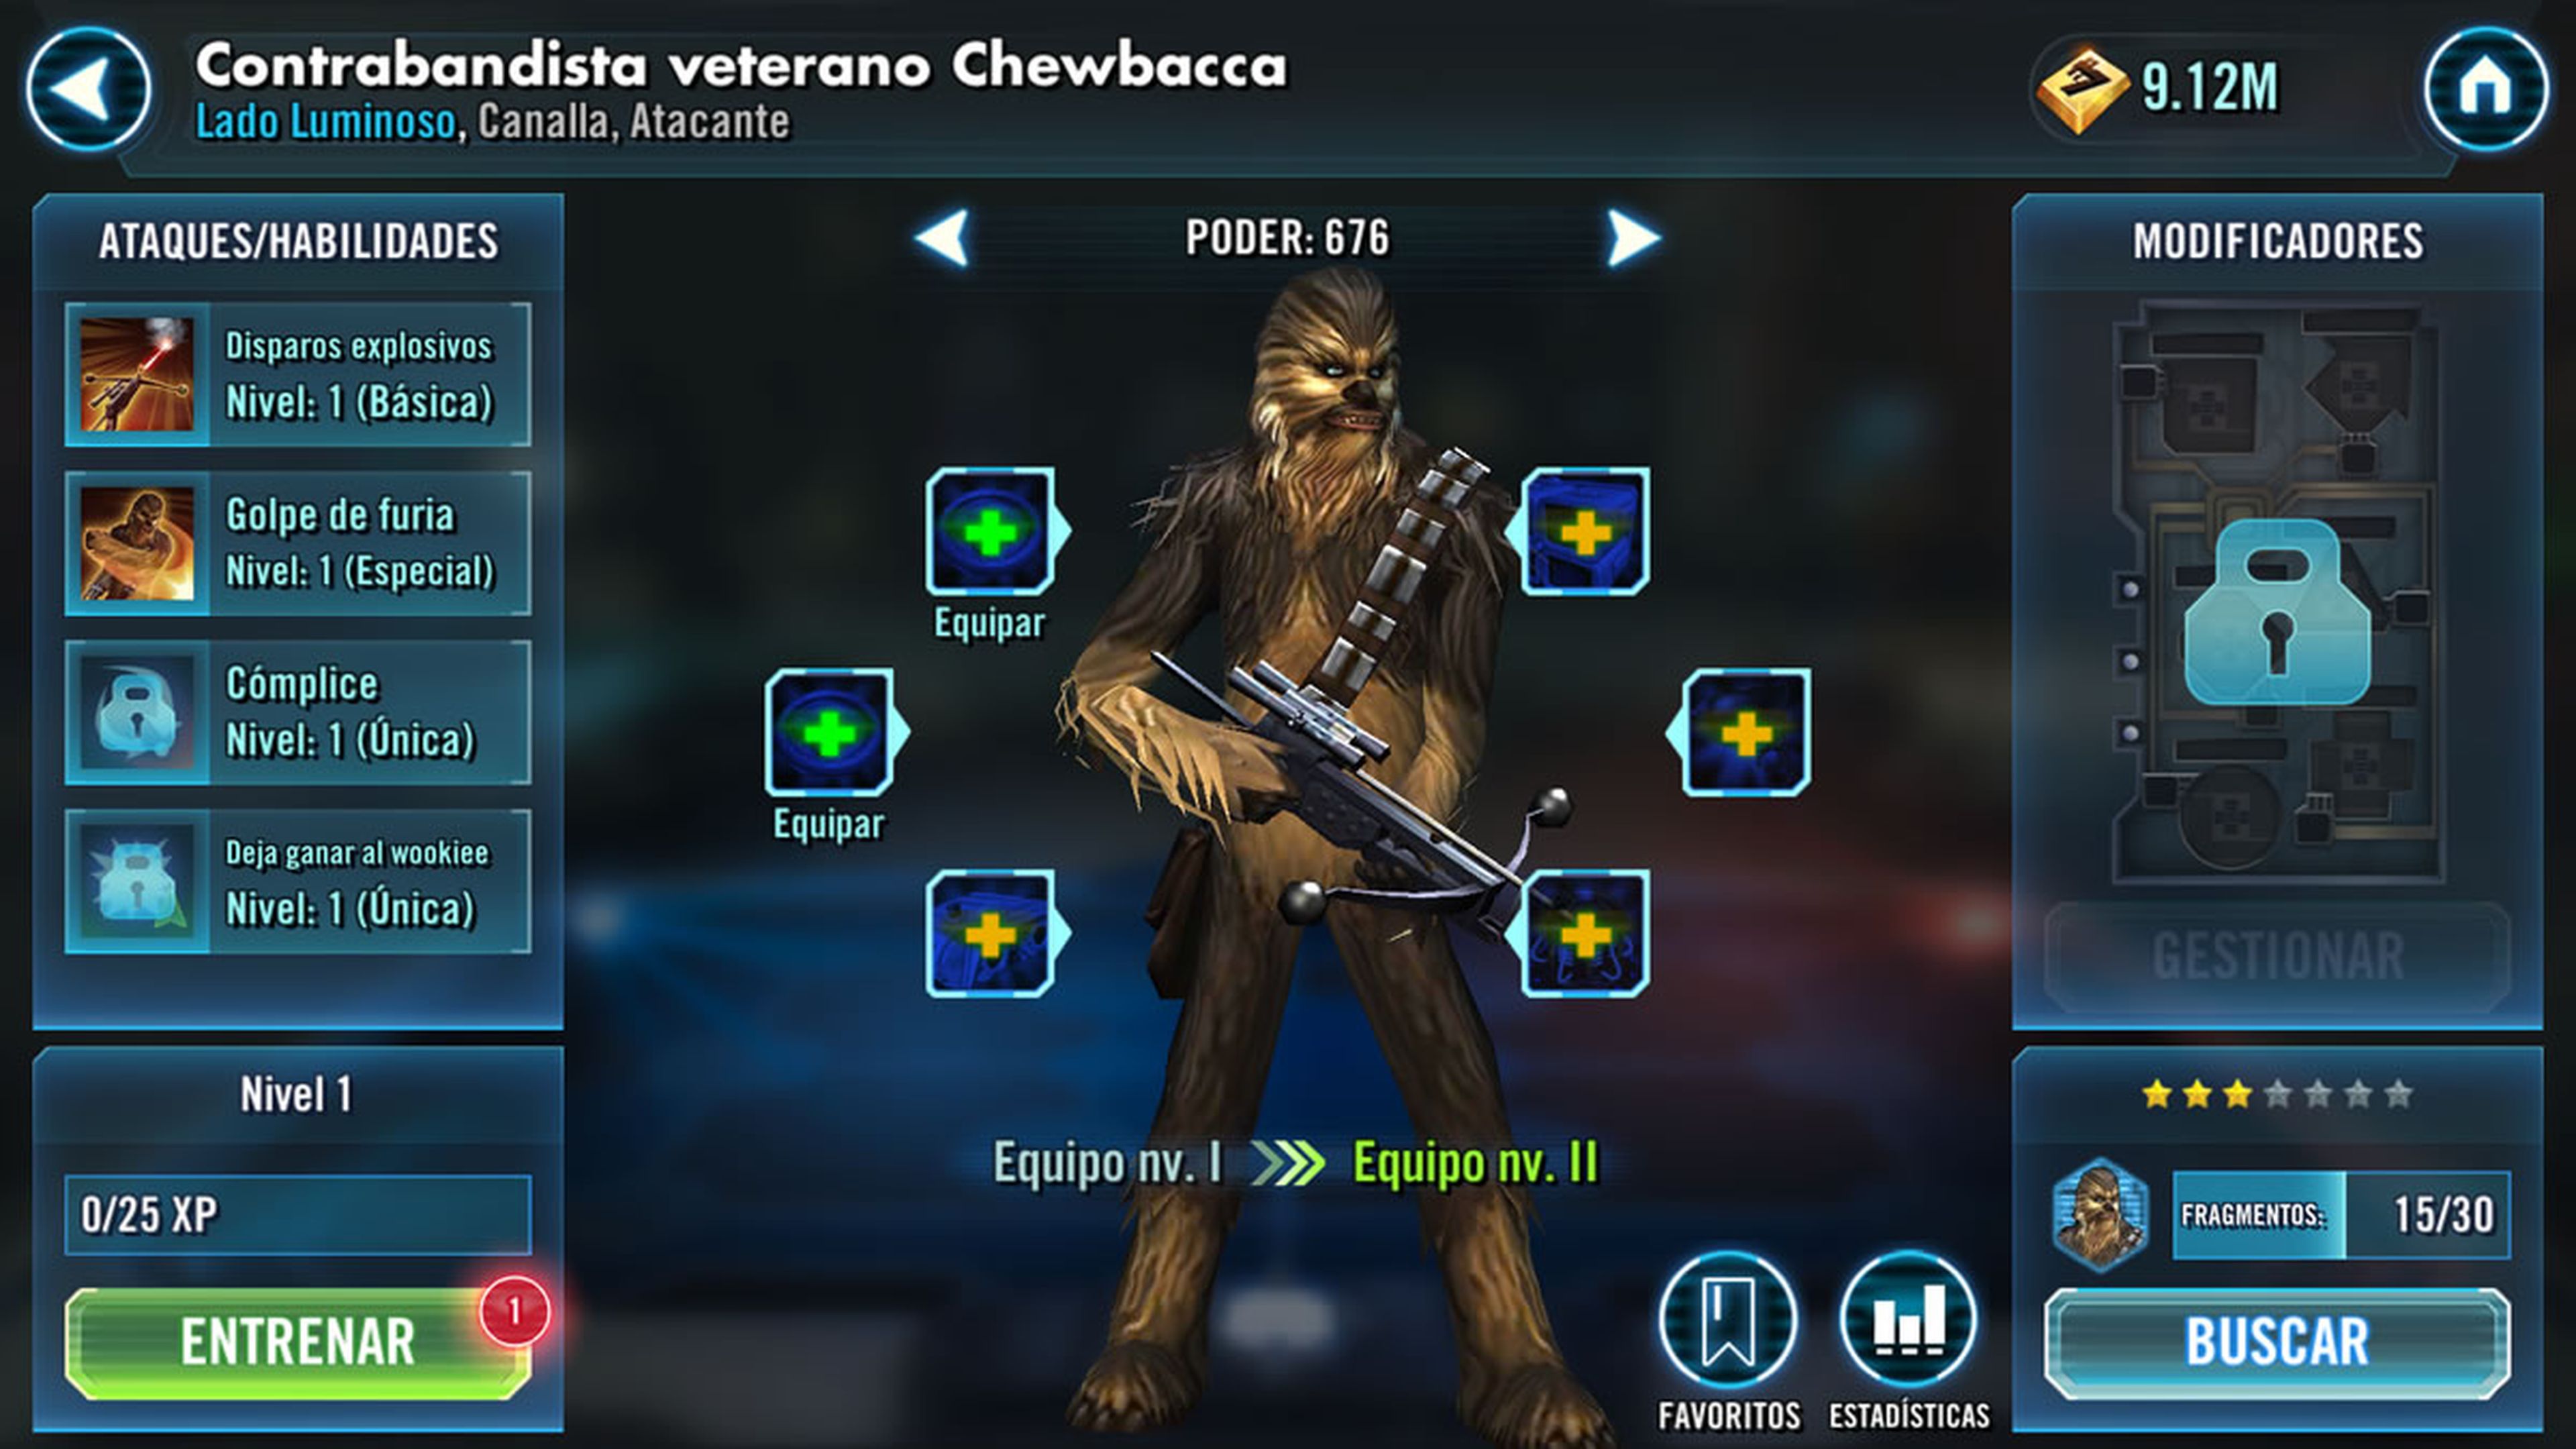 Contrabandista veterano Chewbacca